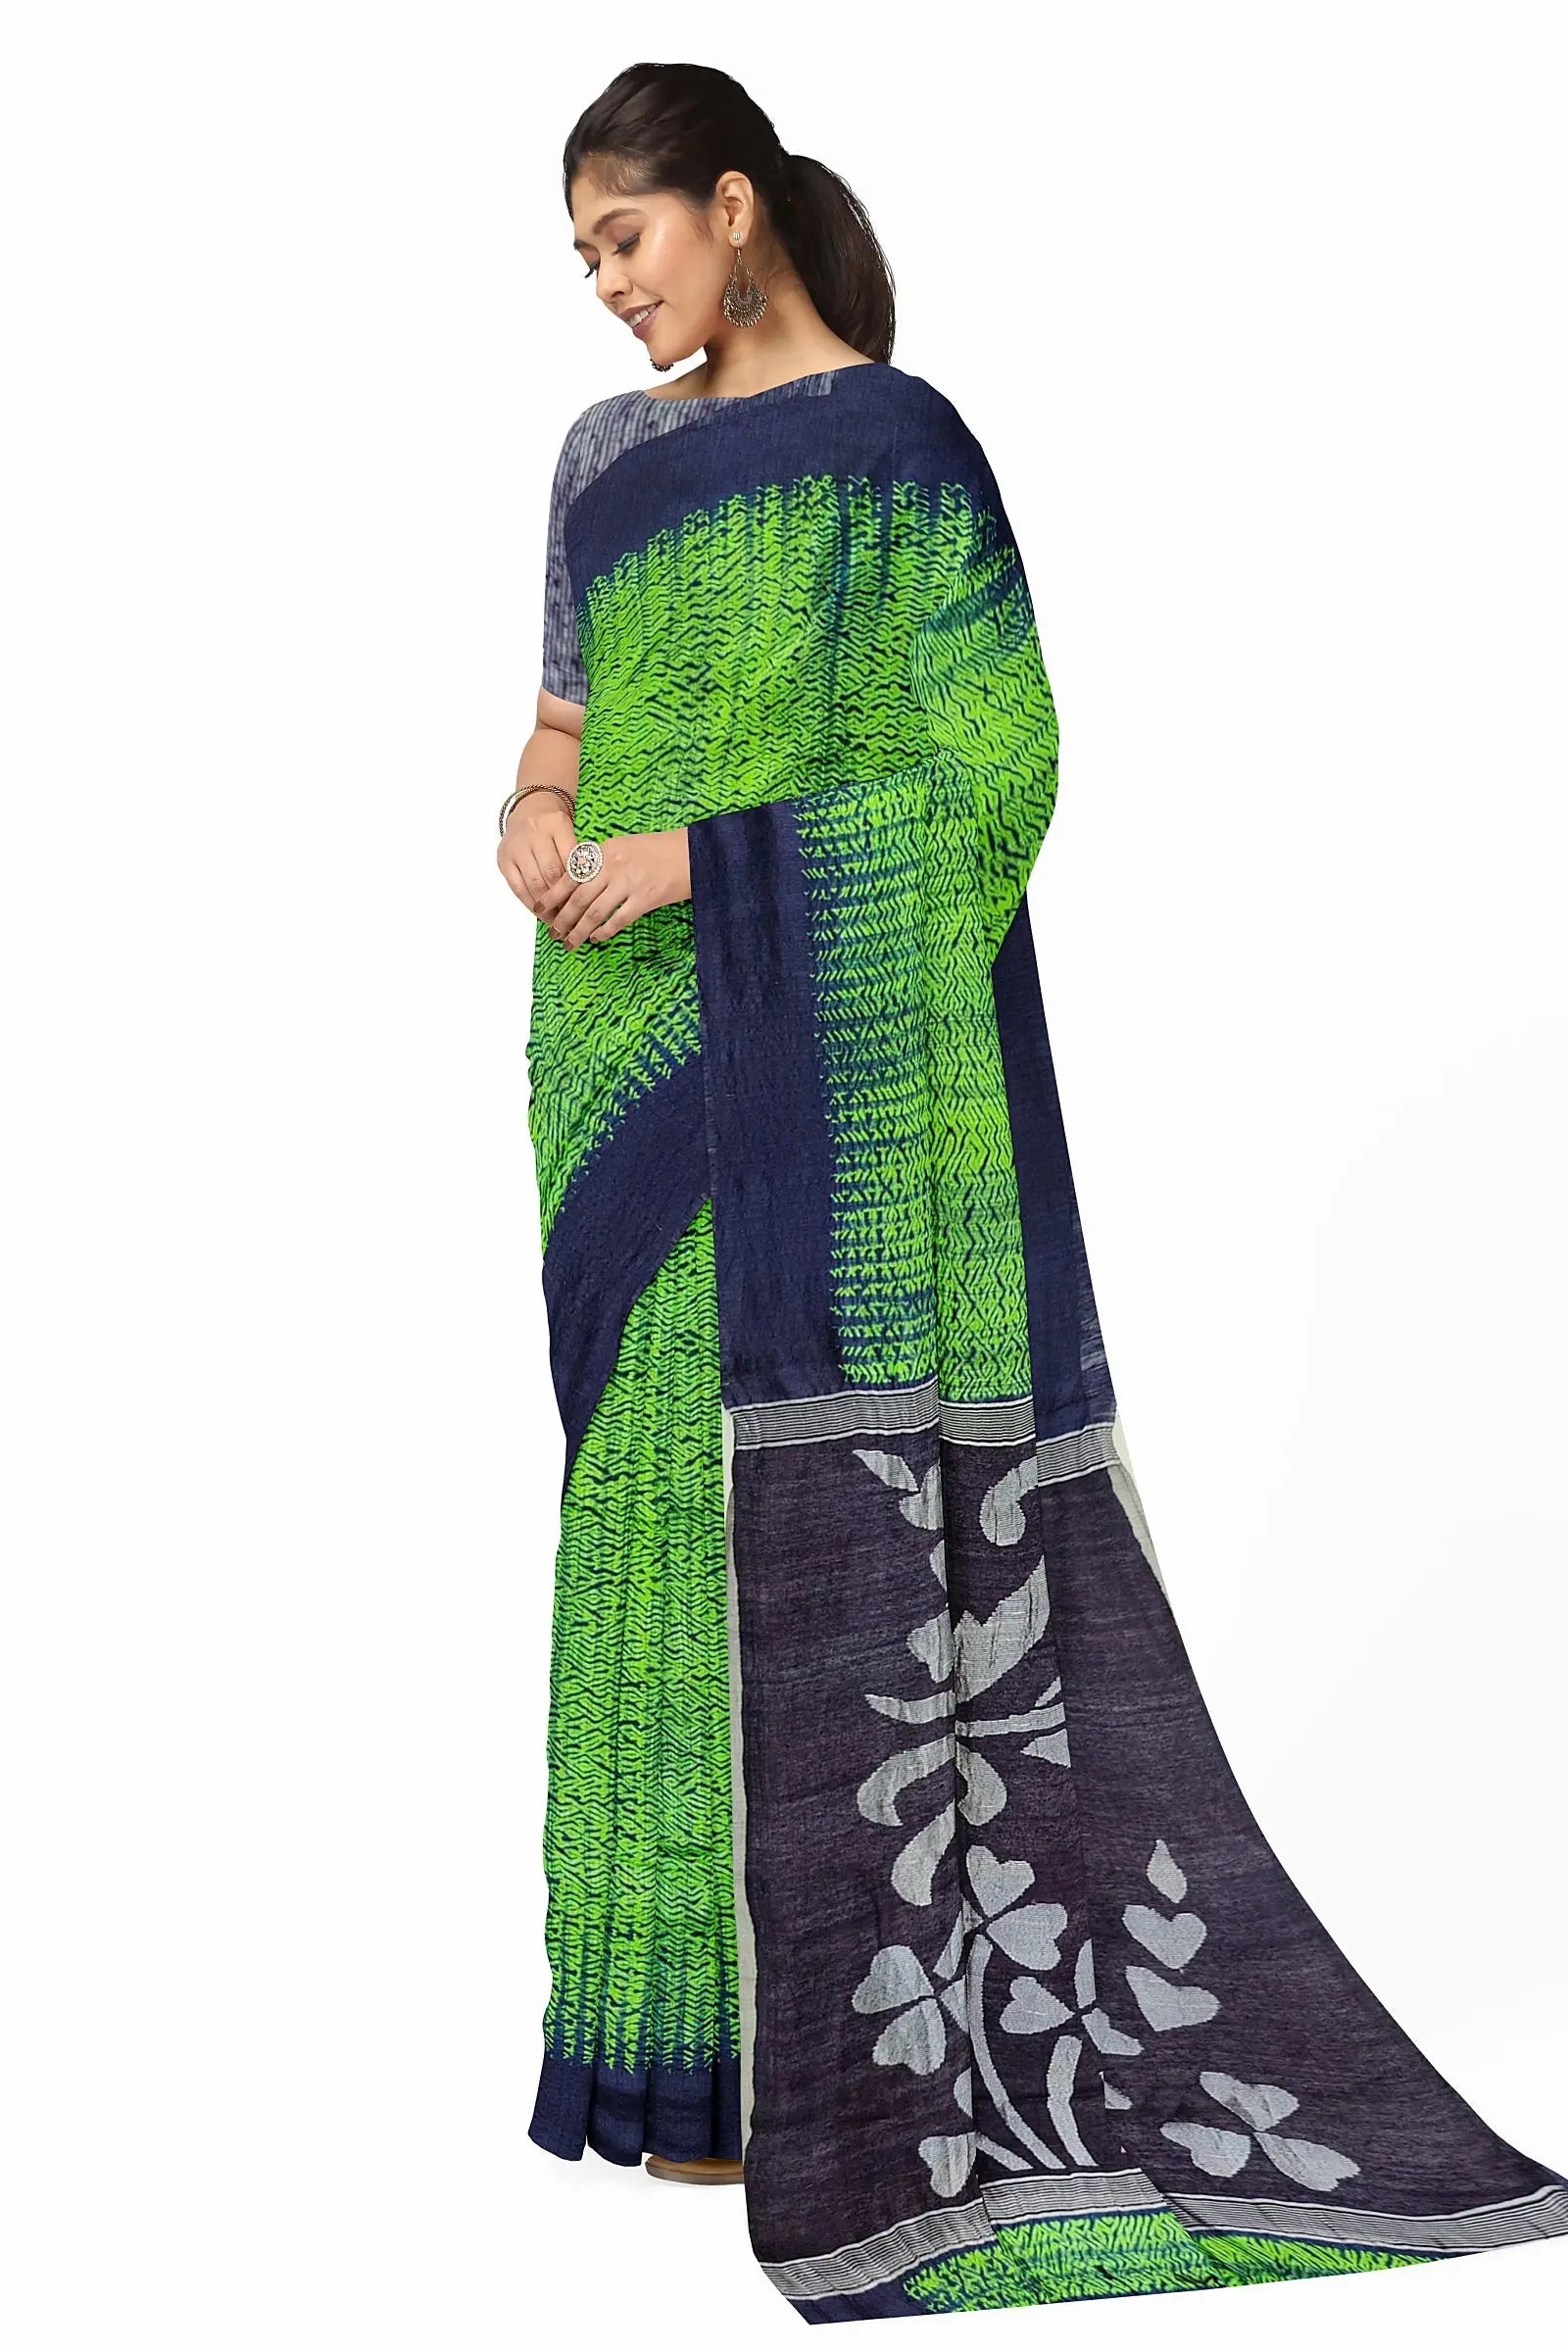 shibori motif on motka silk Putul's fashion